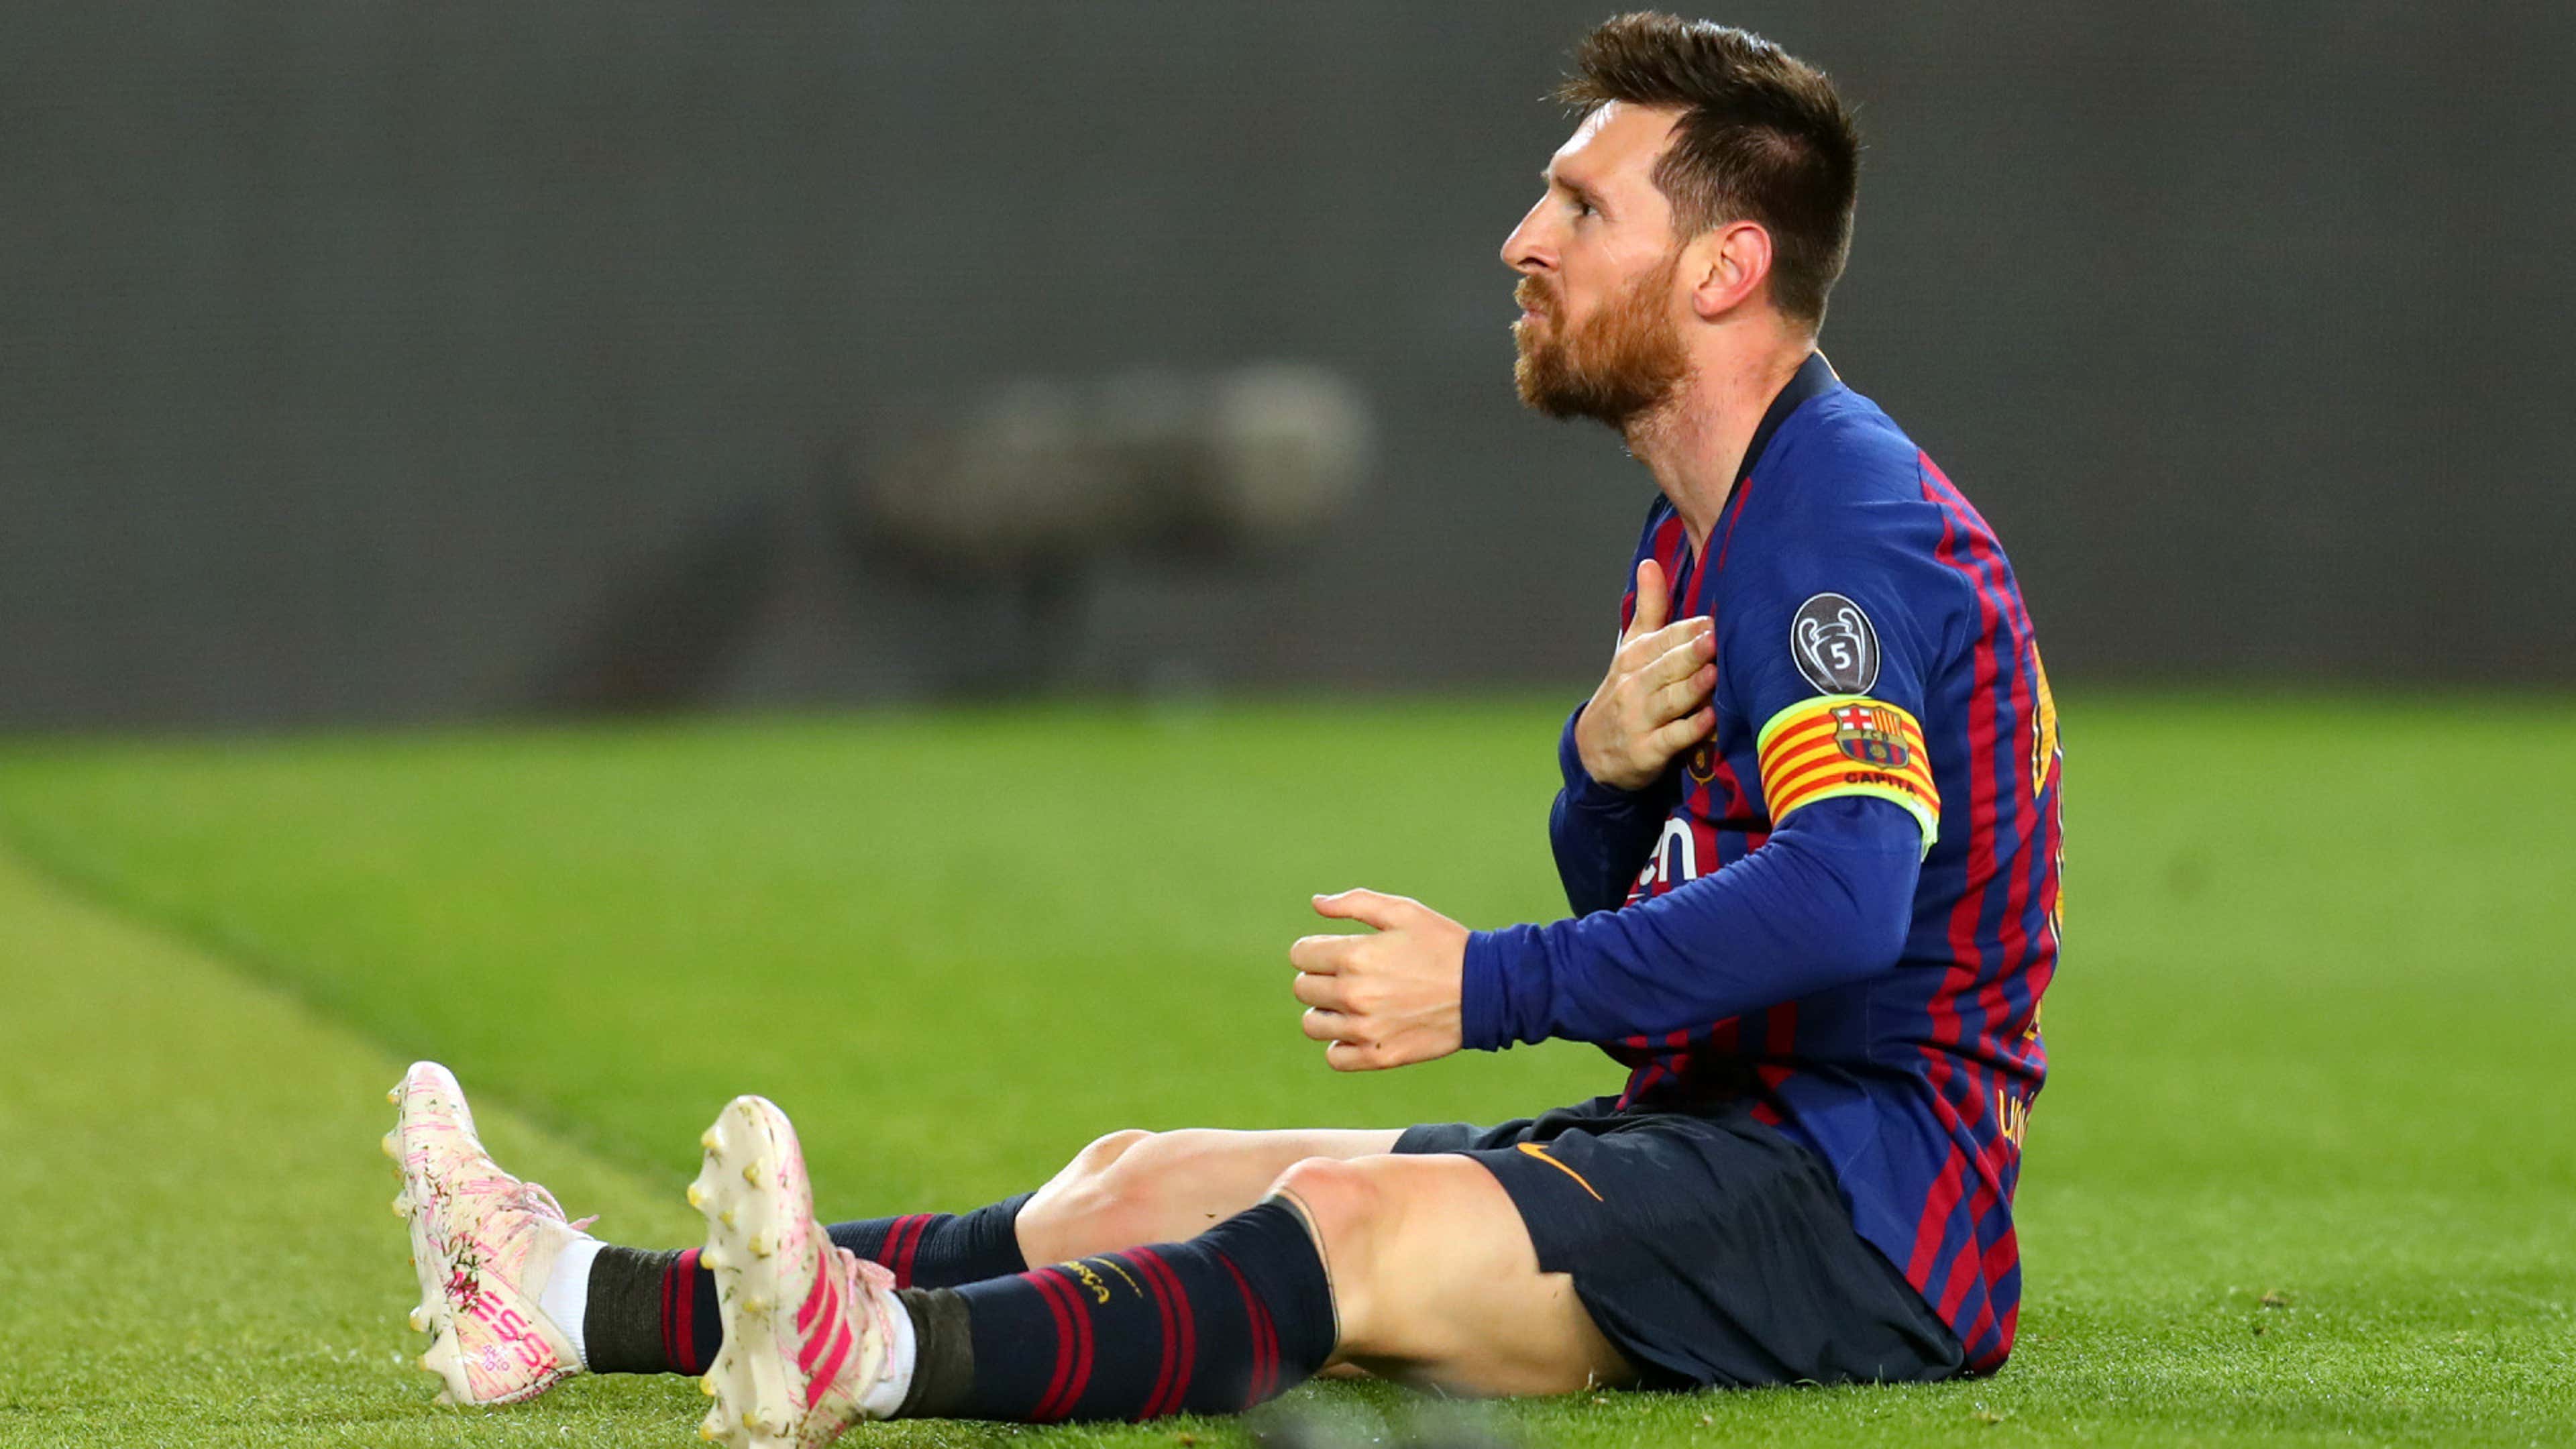 Lionel Messi Barcelona Liverpool